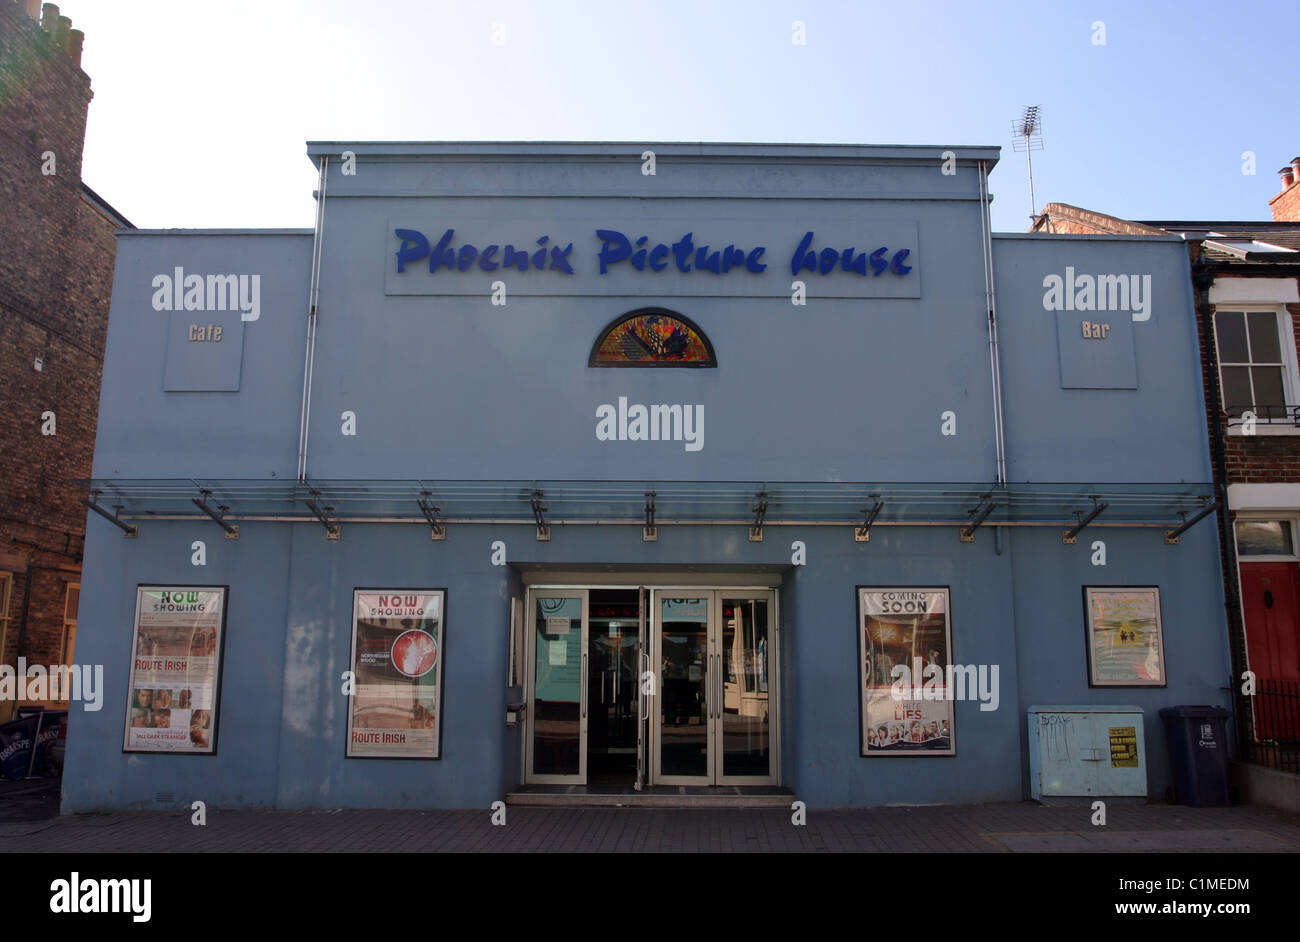 The Phoenix Picture House Cinema, Jericho, Oxford Stock Photo - Alamy